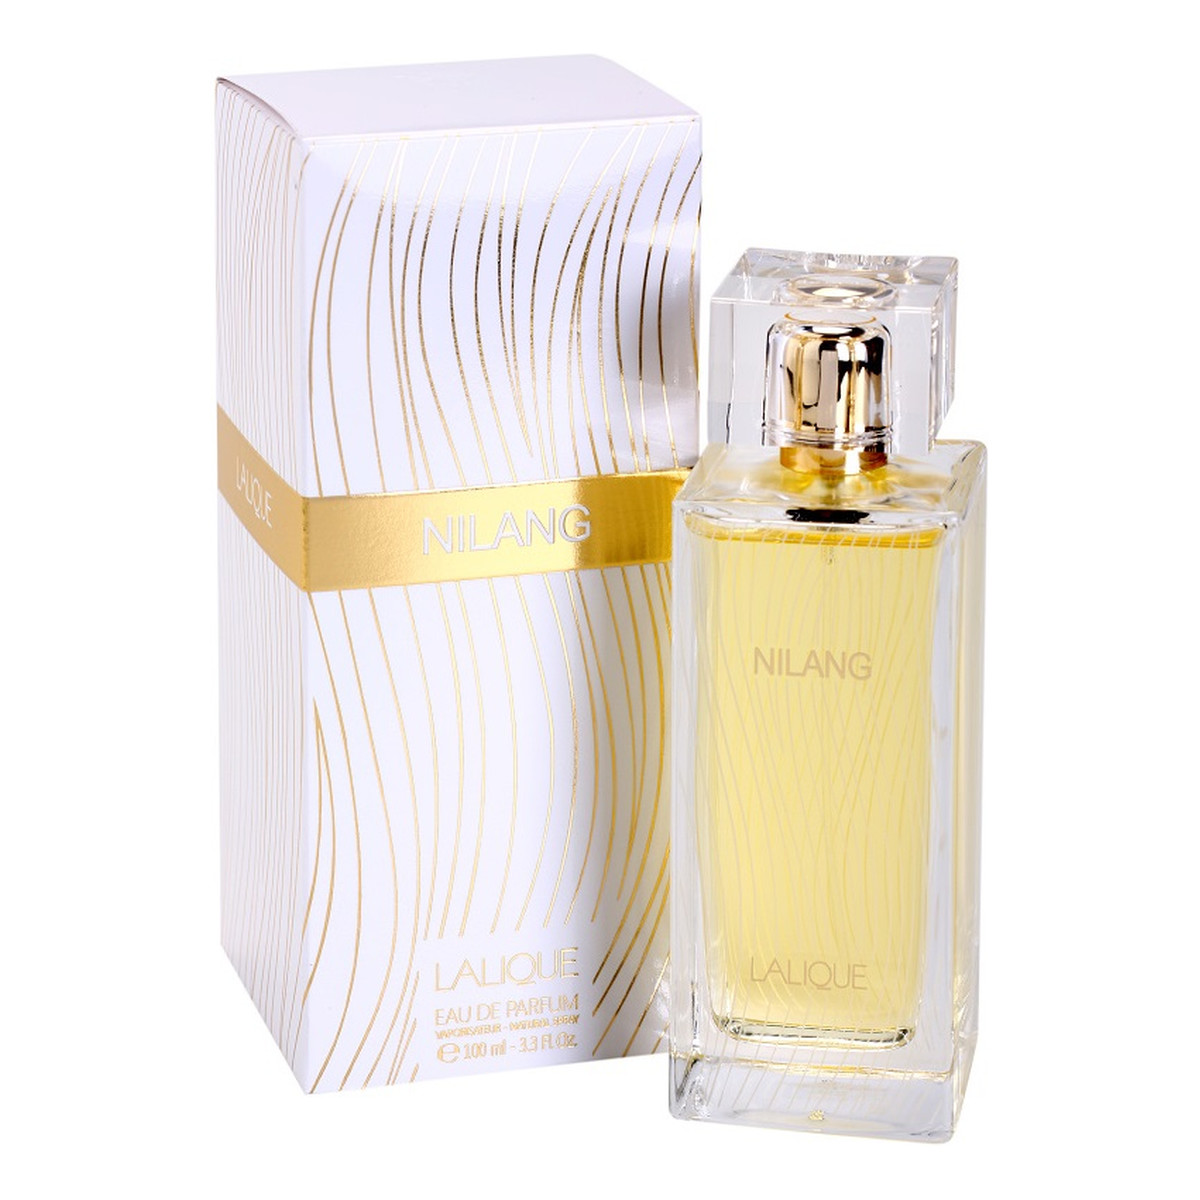 Lalique Nilang Woda perfumowana dla kobiet 100ml